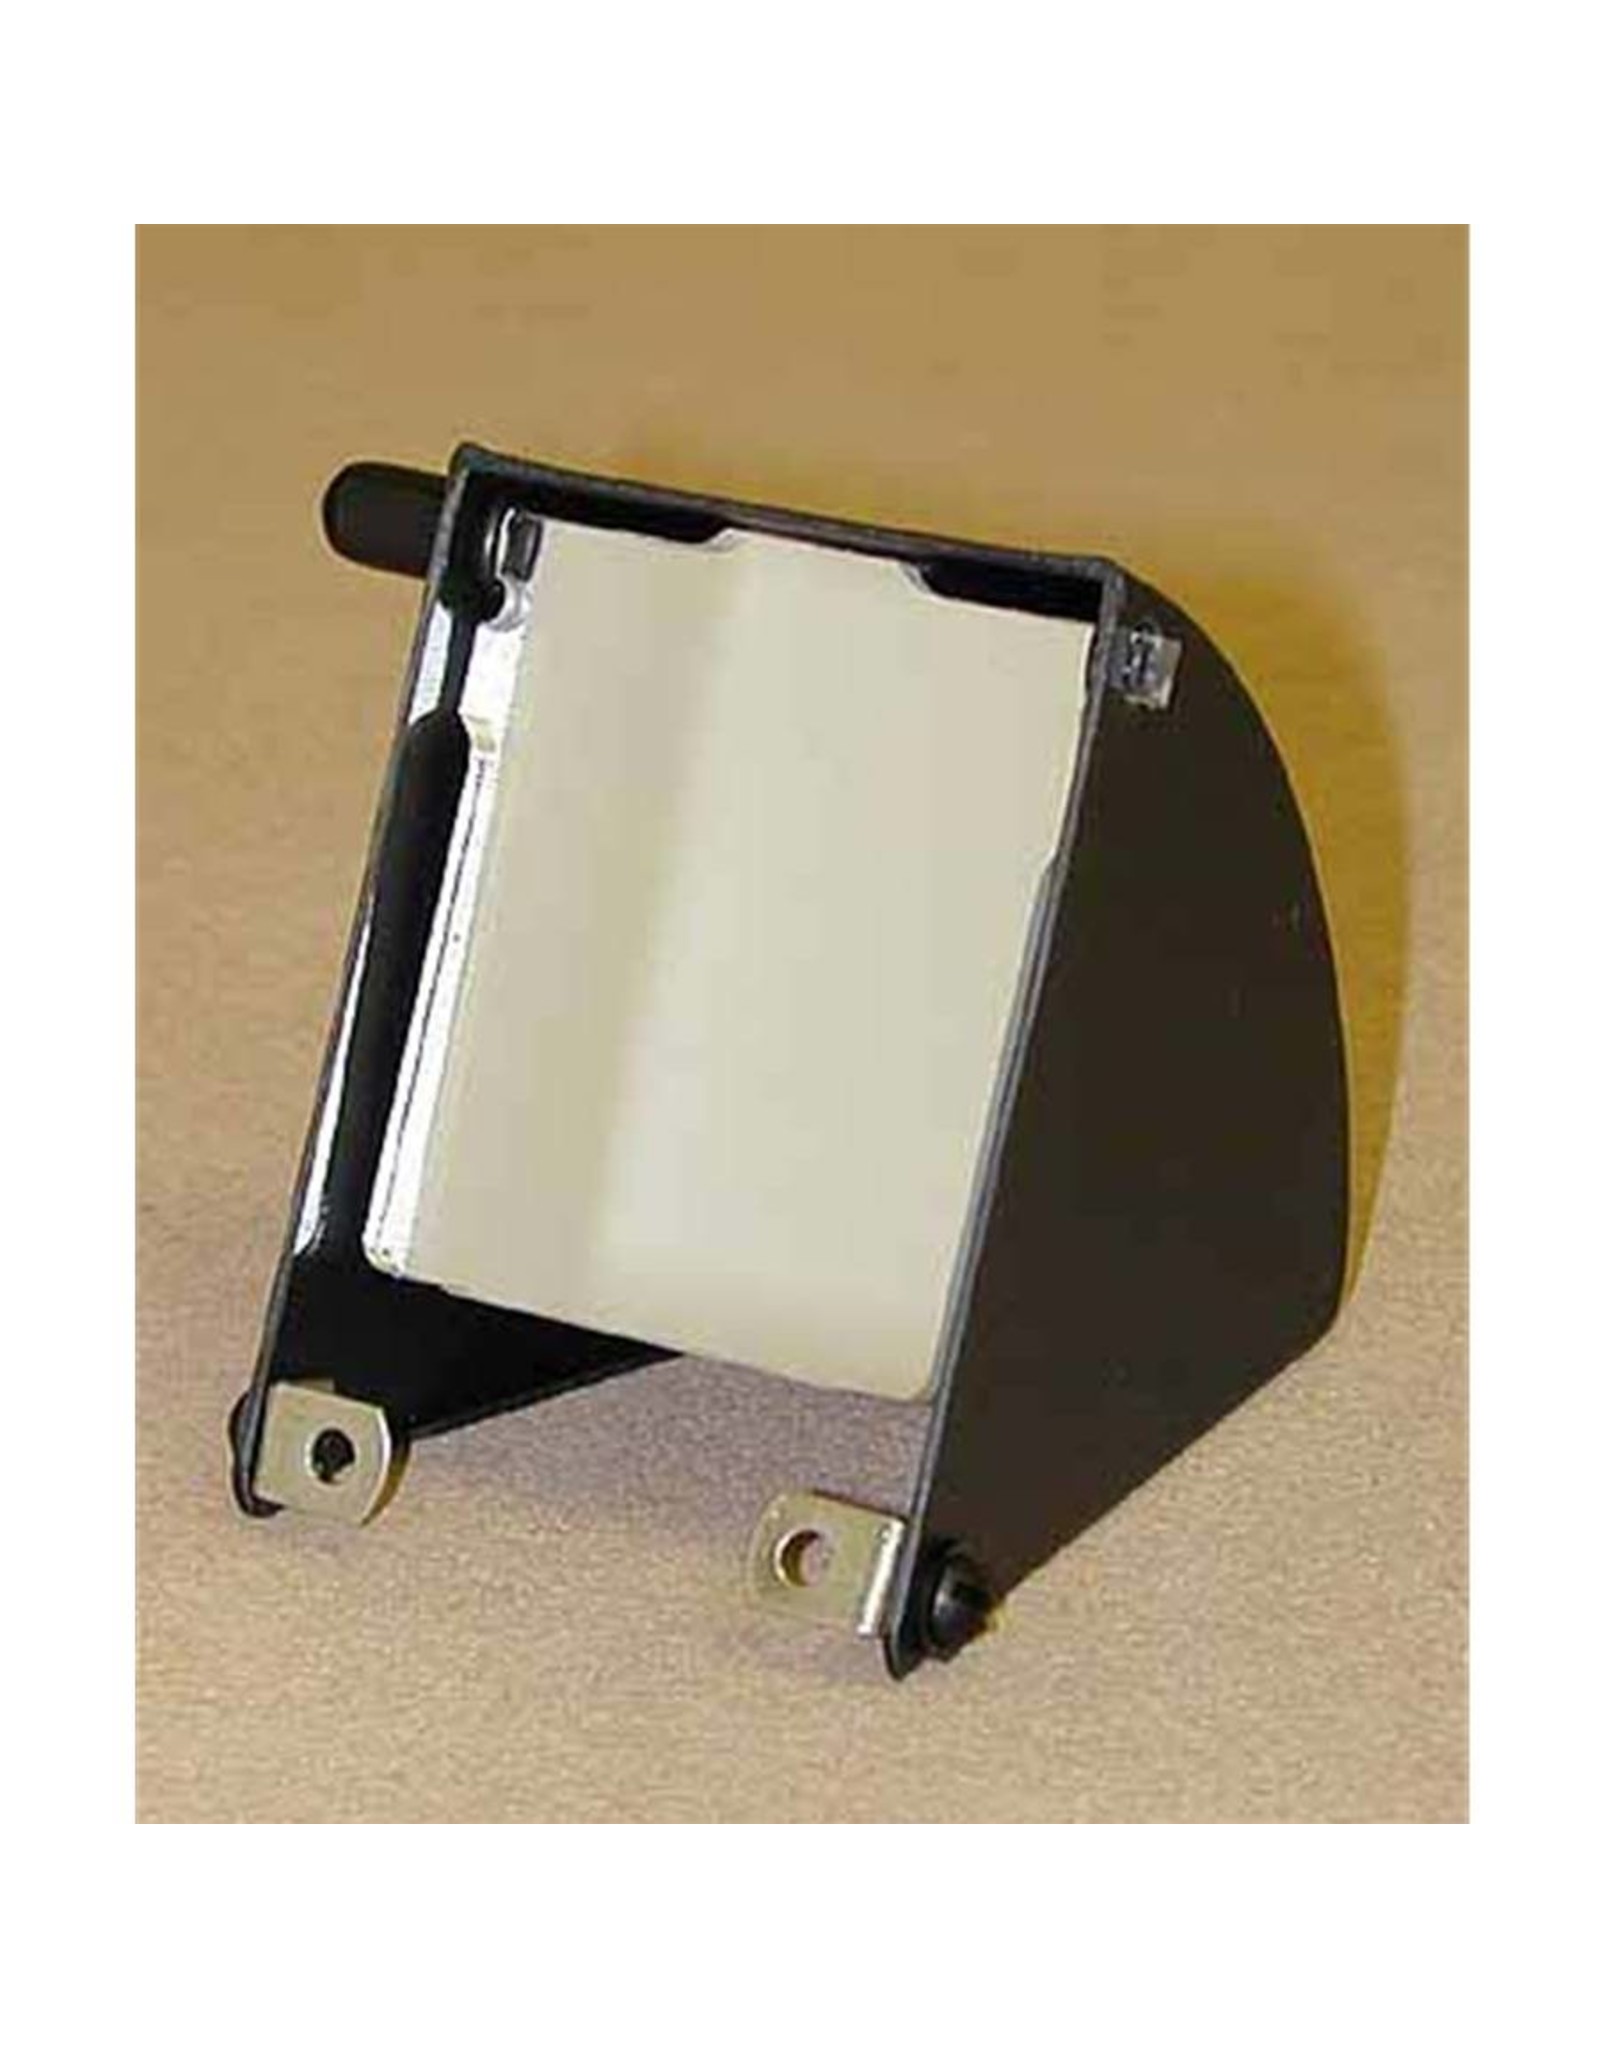 Telrad Telrad Dew Shield Plus For Telrad (allows right angle viewing)